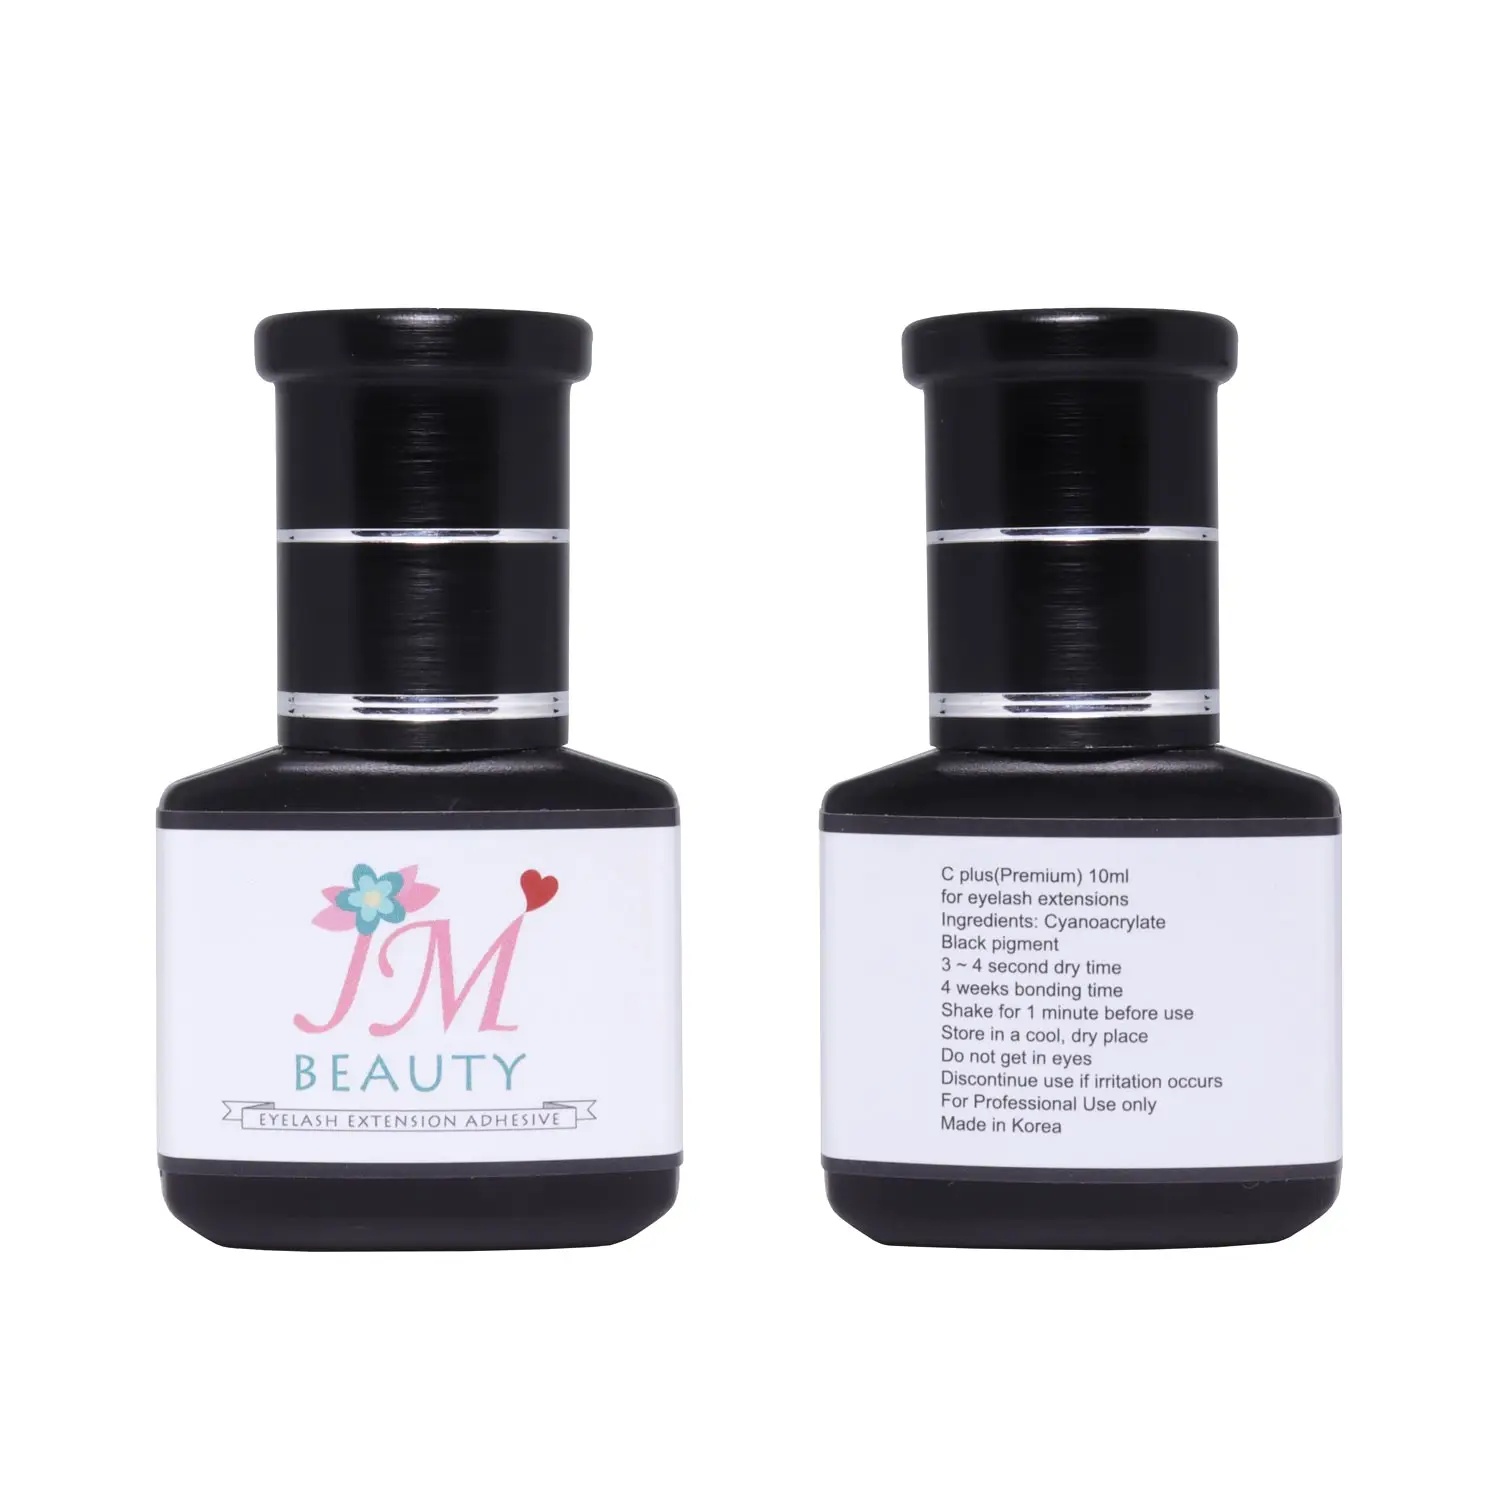 New Arrival Product In Korea JM Glue 10ml Eyelash extension glue C+ type/No Fume/ Premium Adhesive from Korea